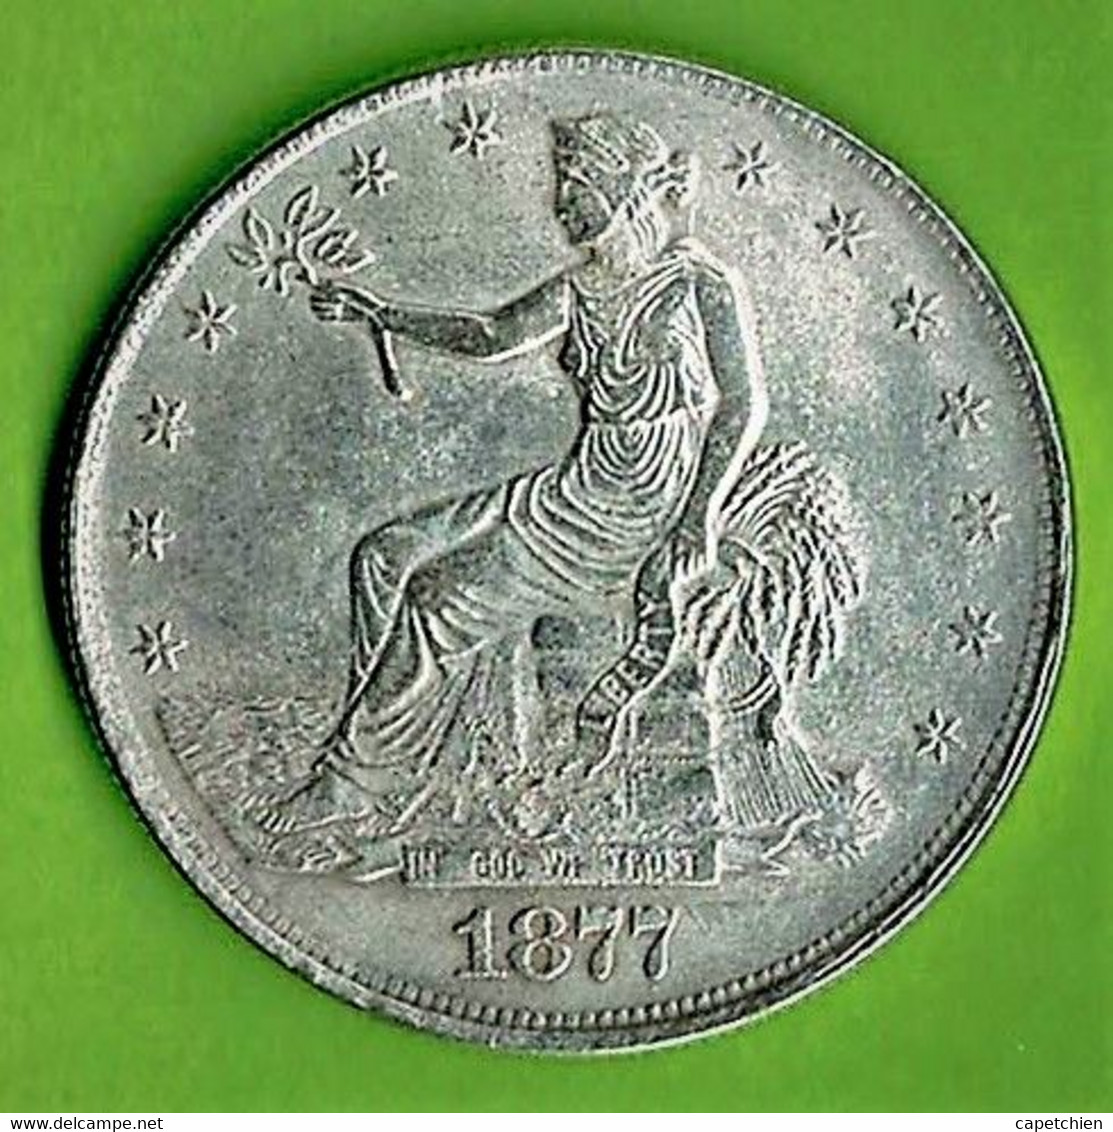 USA / 1 DOLLAR / 1877 / FAUX ( D'origine Asiatique ) ) FALSCHGELD / FAKE COIN - 1873-1885: Trade Dollars